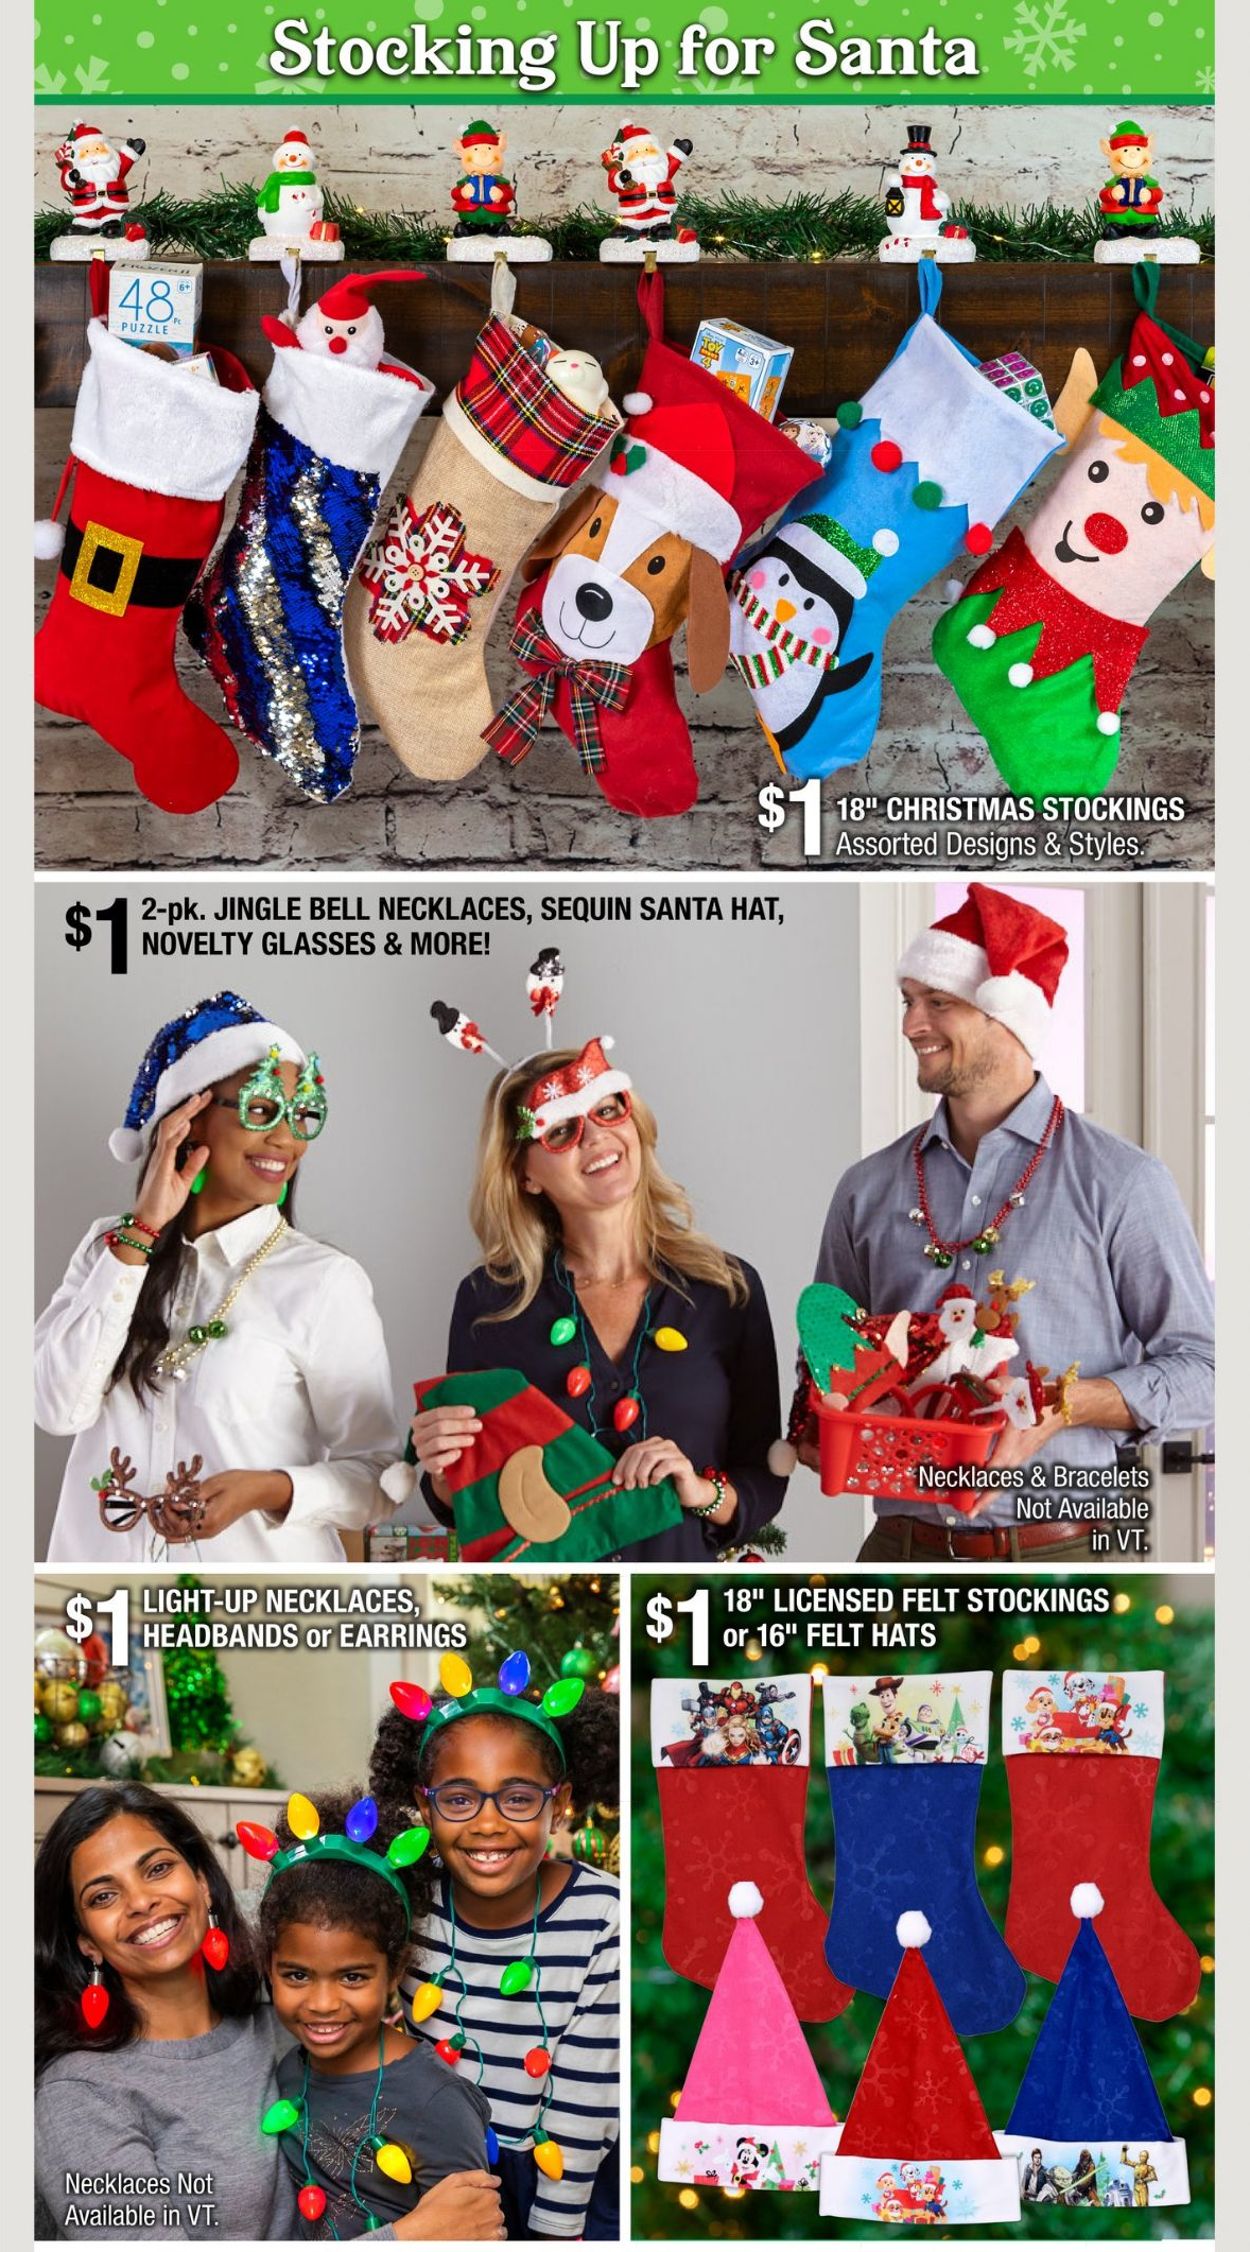 Catalogue Dollar Tree - Christmas Ad 2019 from 12/01/2019